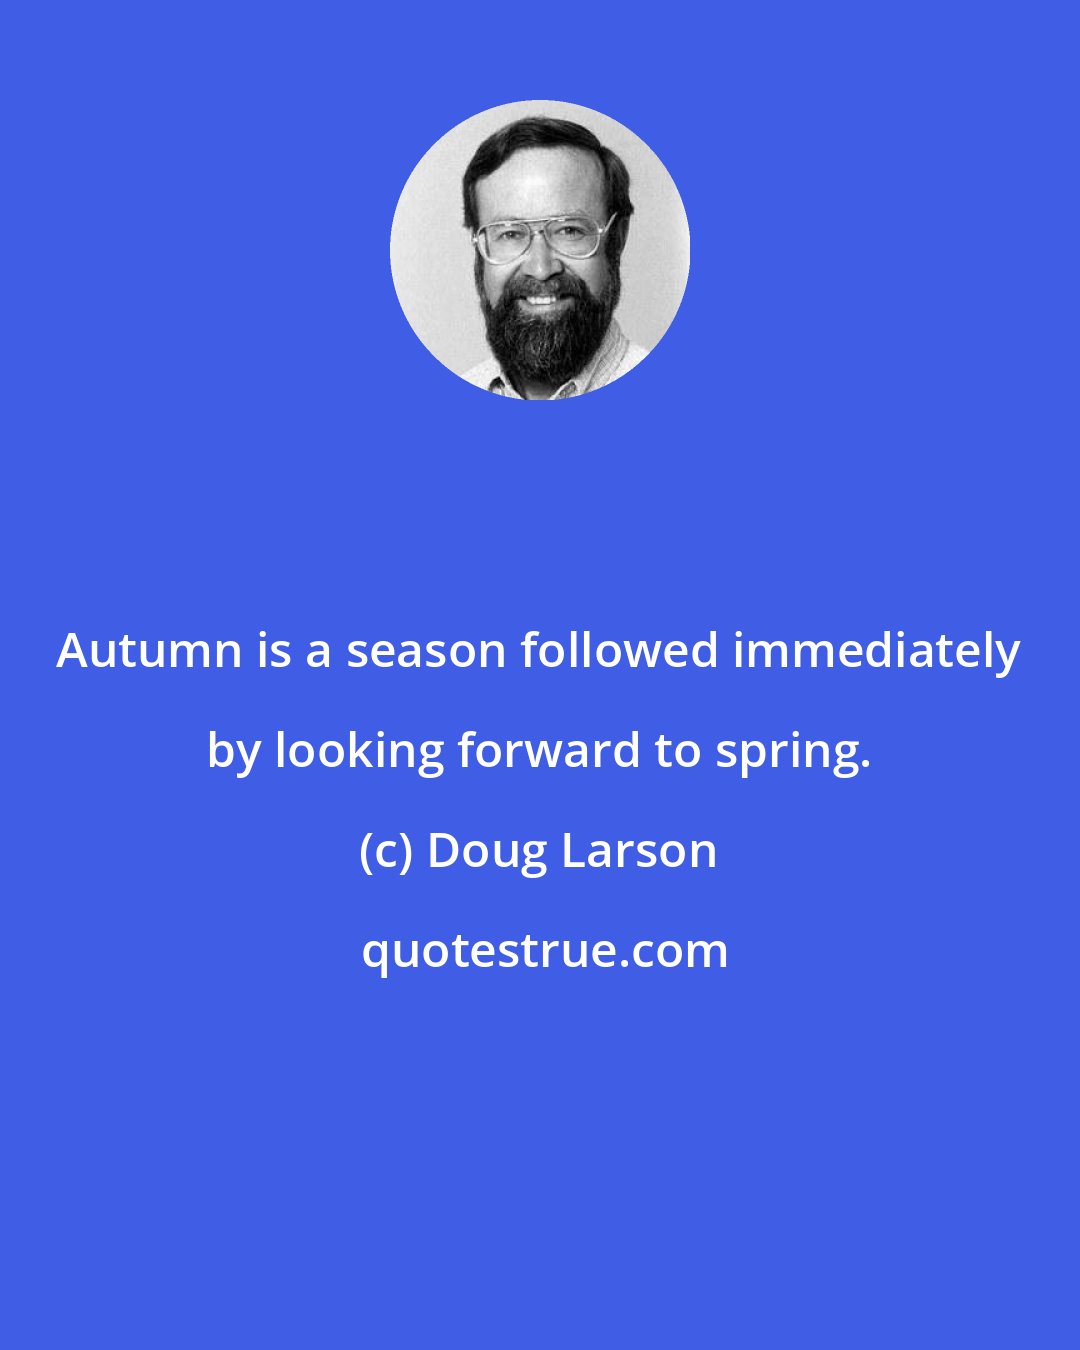 Doug Larson: Autumn is a season followed immediately by looking forward to spring.